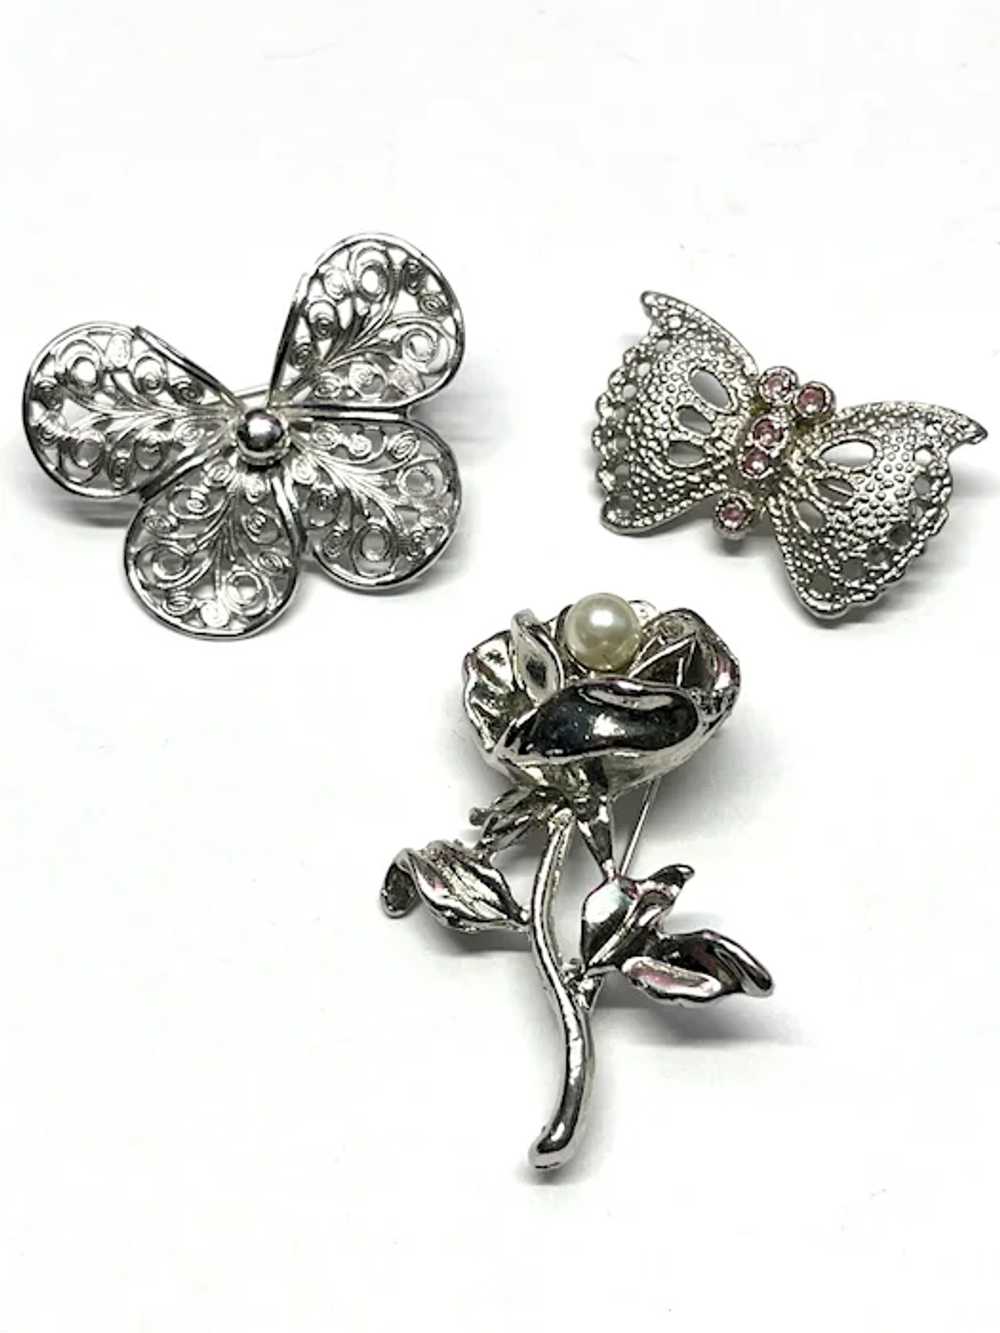 Three Vintage Silver Brooch Pins - image 3